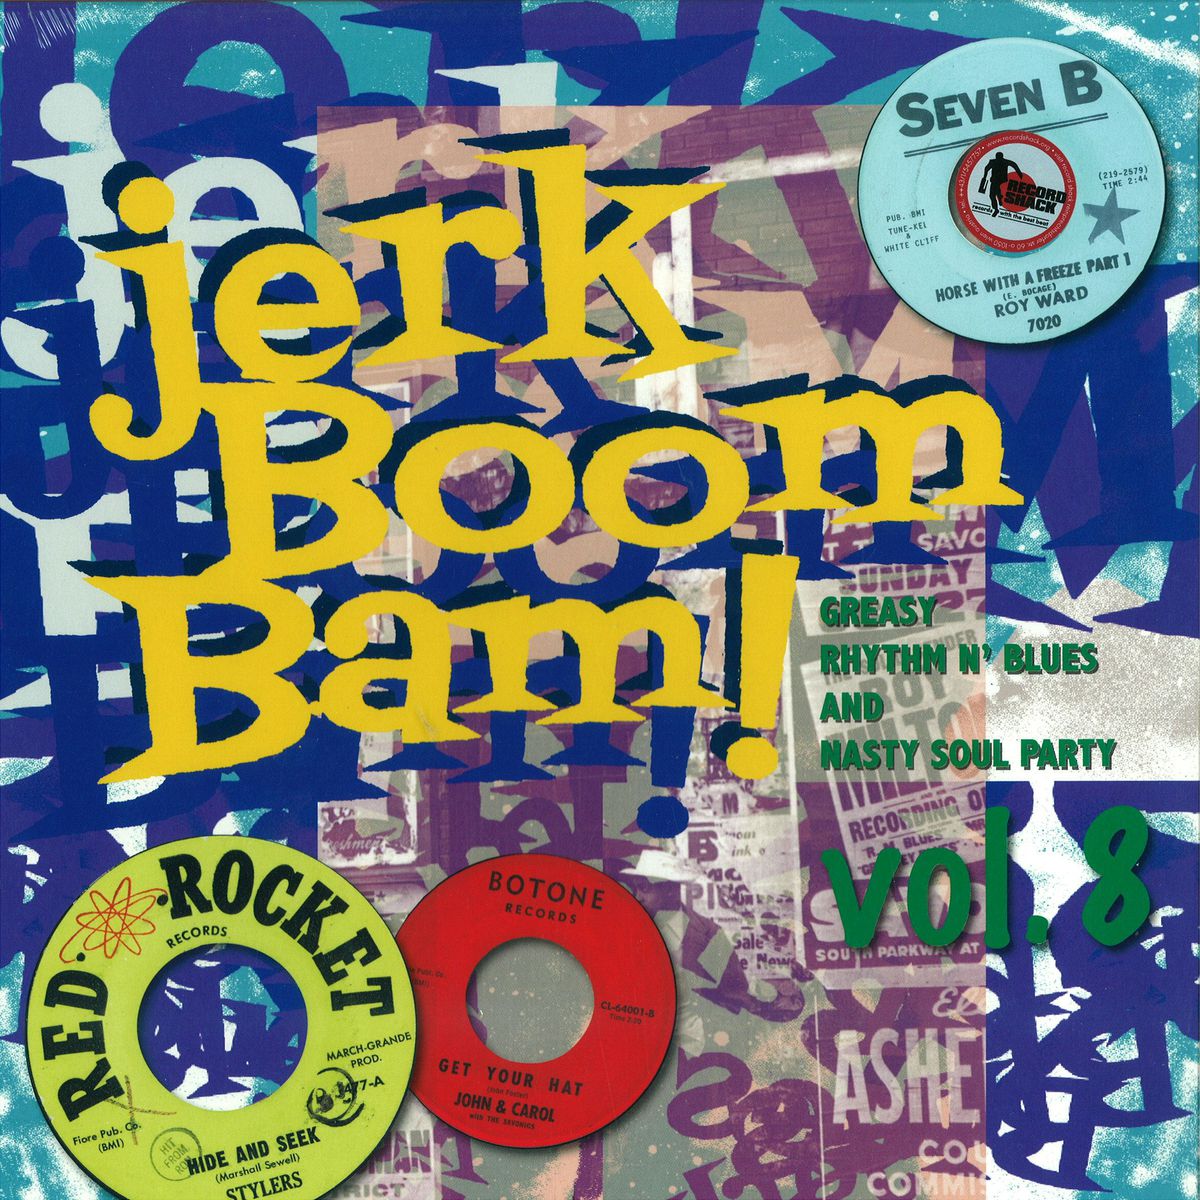 Various – Jerk Boom Bam! Vol 8 – Greasy Rhythm N’ Blues And Nasty Soul Party Music Album mind blowing rockin' series! Enjoy : sunnyboy66.com/various-jerk-b… #sunnyboy66 #rhythmandblues #50smusic #60smusic #boogaloo #boogaloomusic #50sfunk #60sfunk #50sfunkmusic #60sfunkmusic